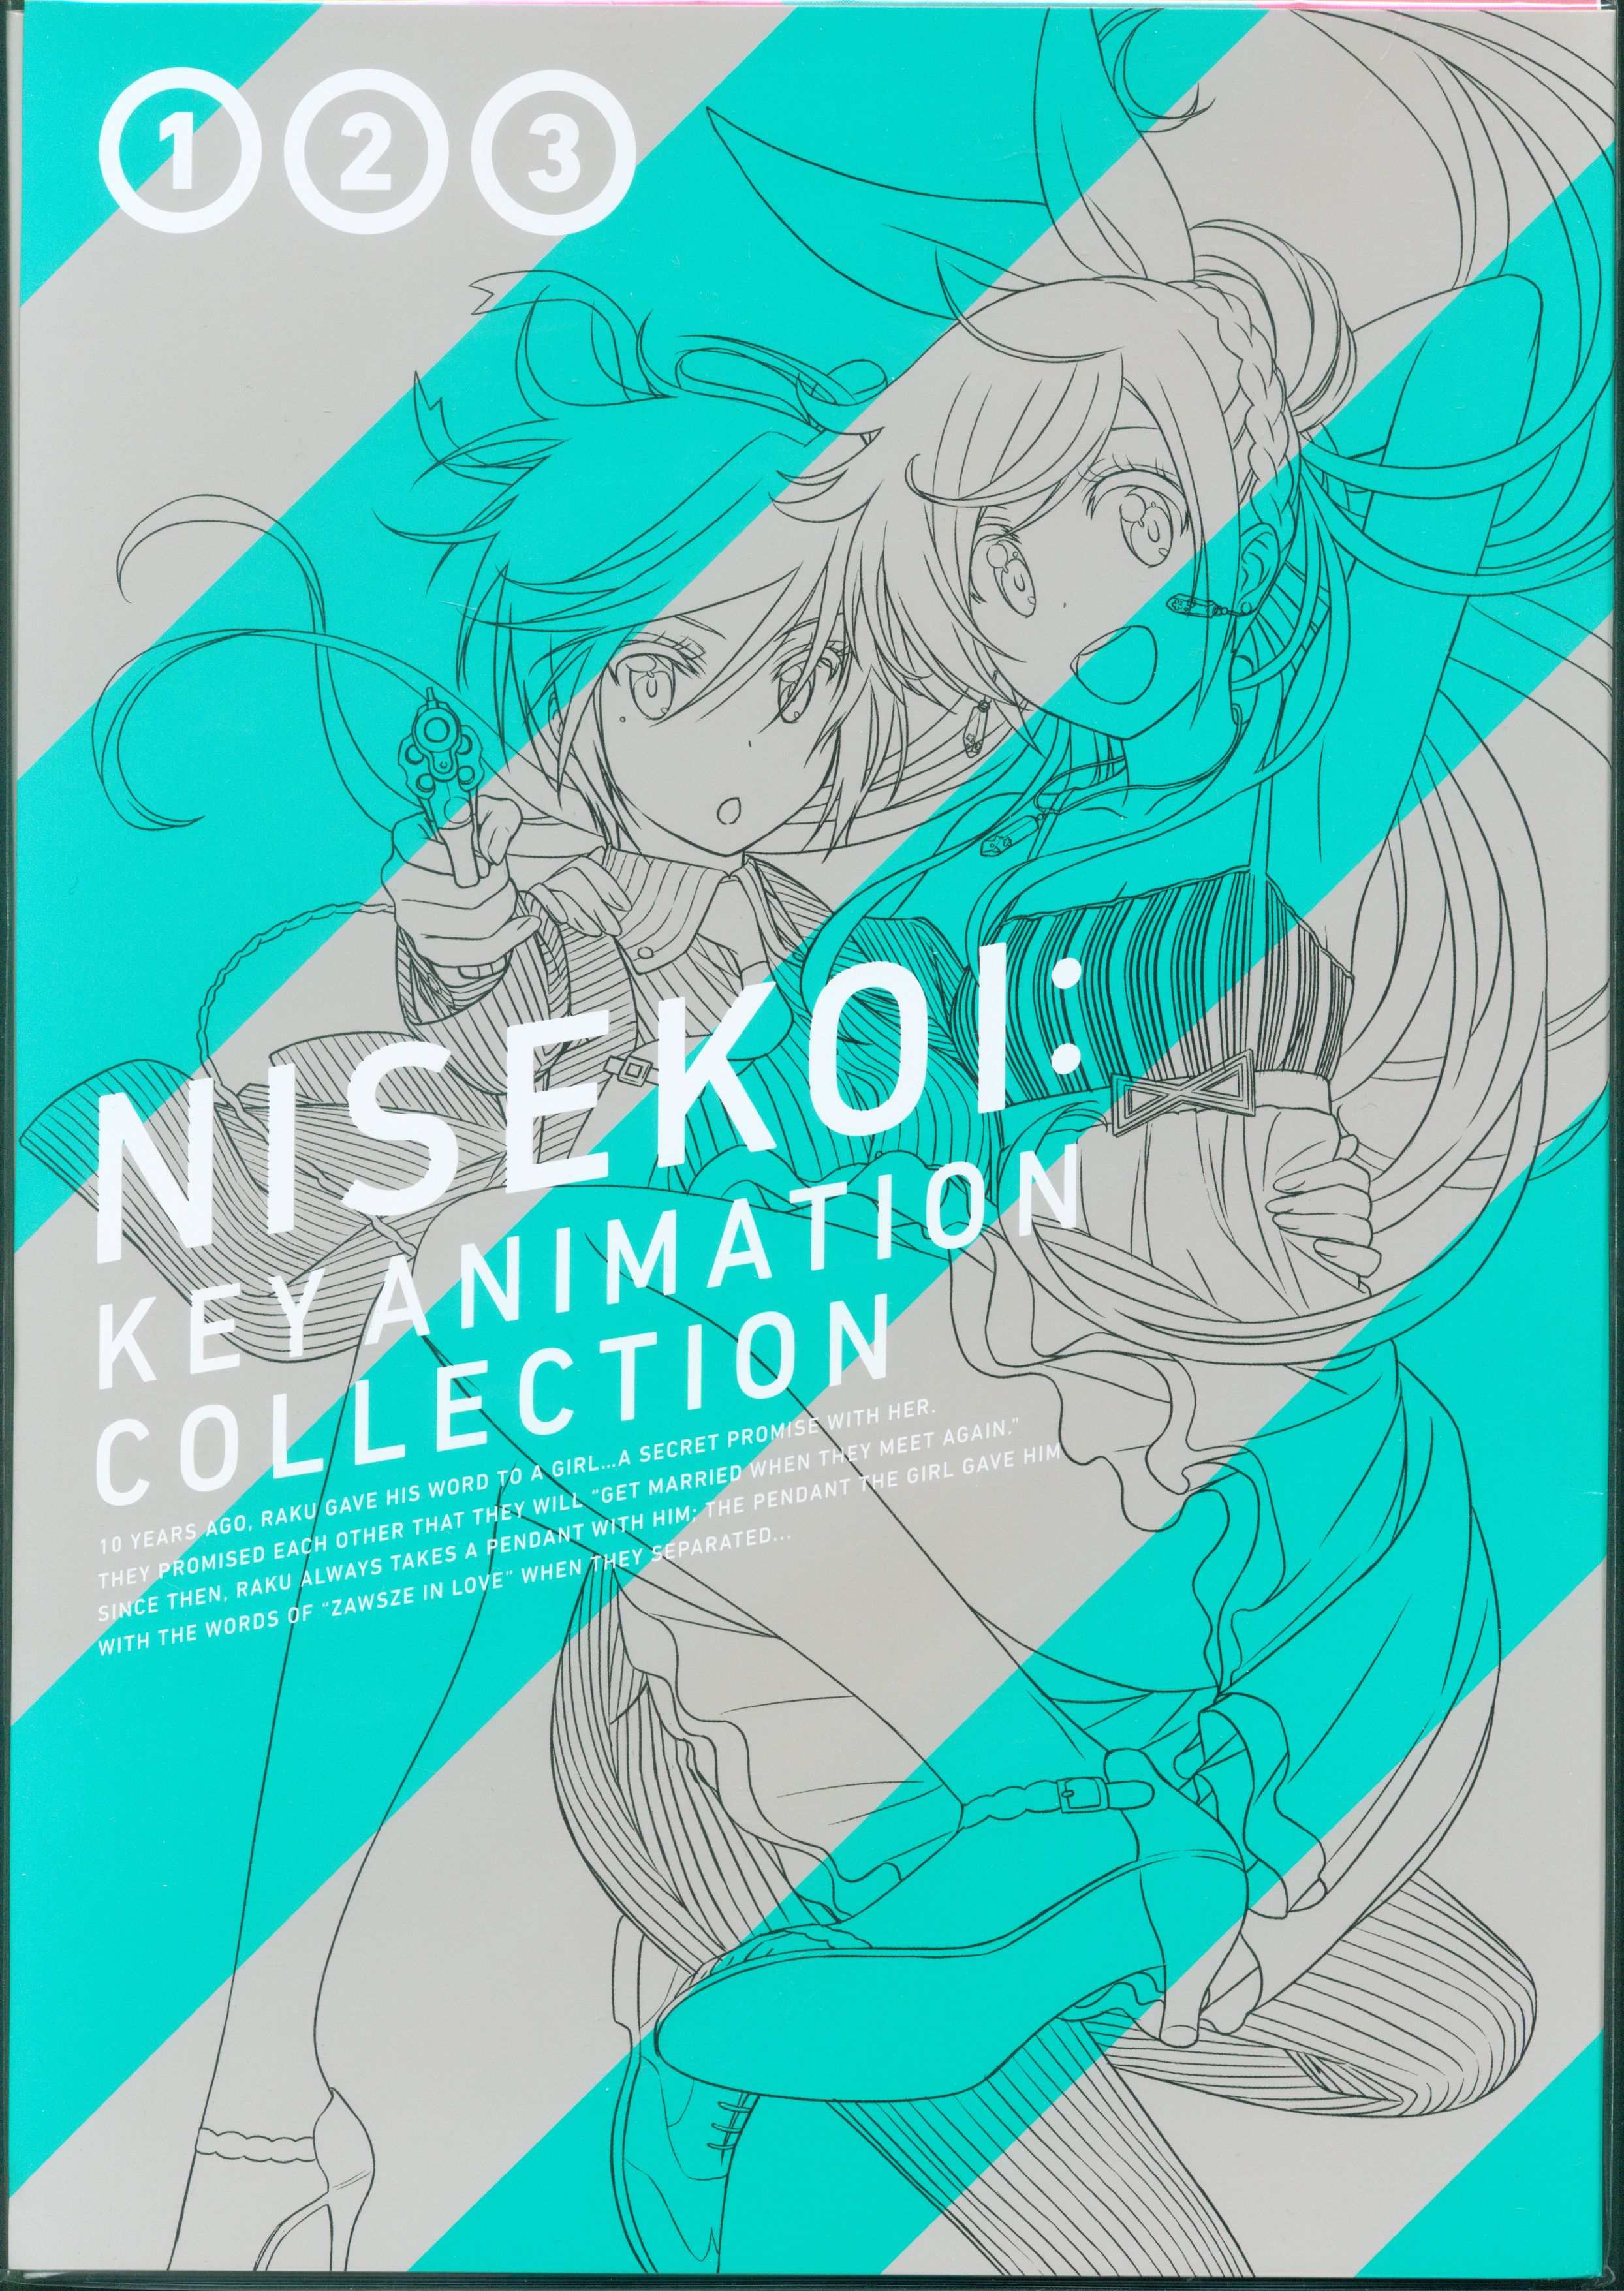 Nisekoi ニセコイ Key Animation Collection 複製原画セット Vol 1 Vol 2 まんだらけ Mandarake